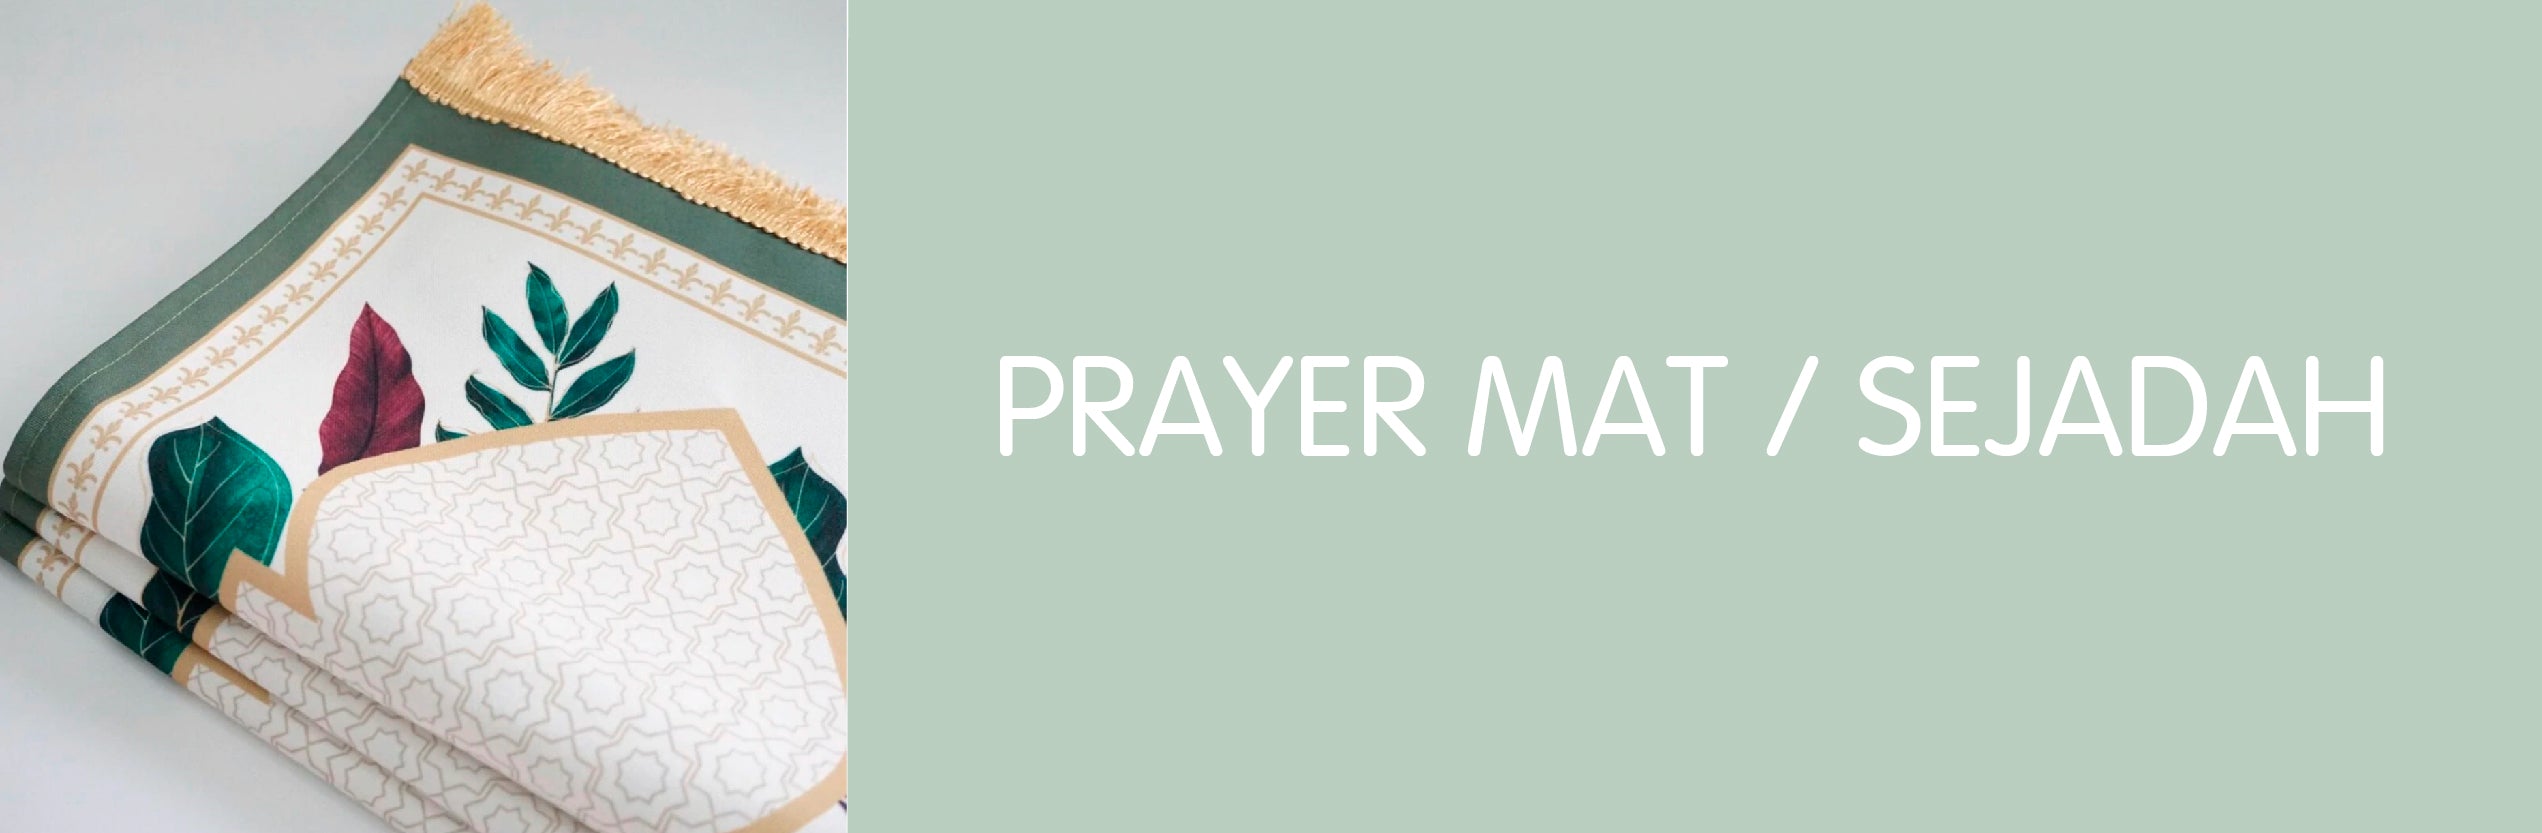 Prayer Mat / Sejadah